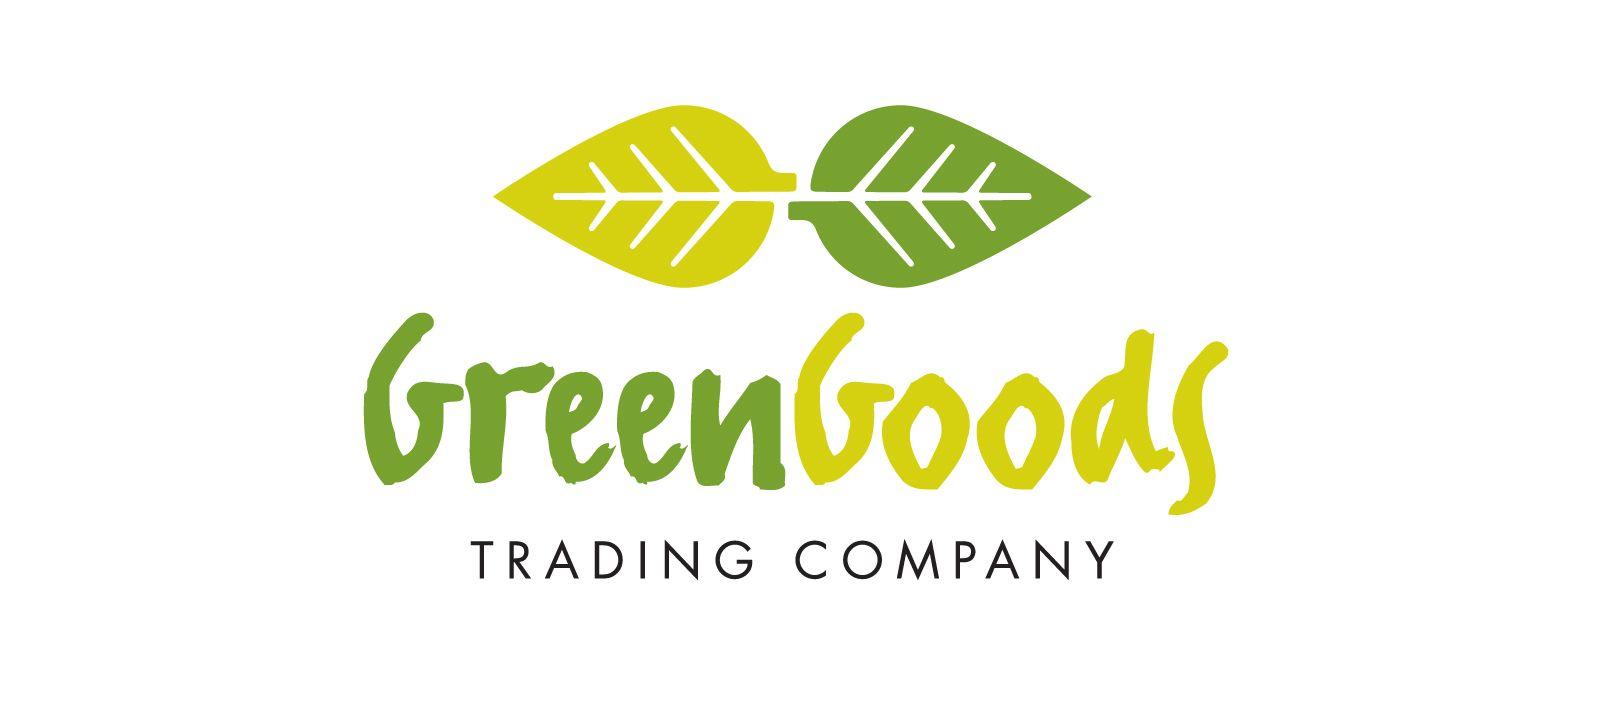 Green Goods Logo - Logos | PL Design